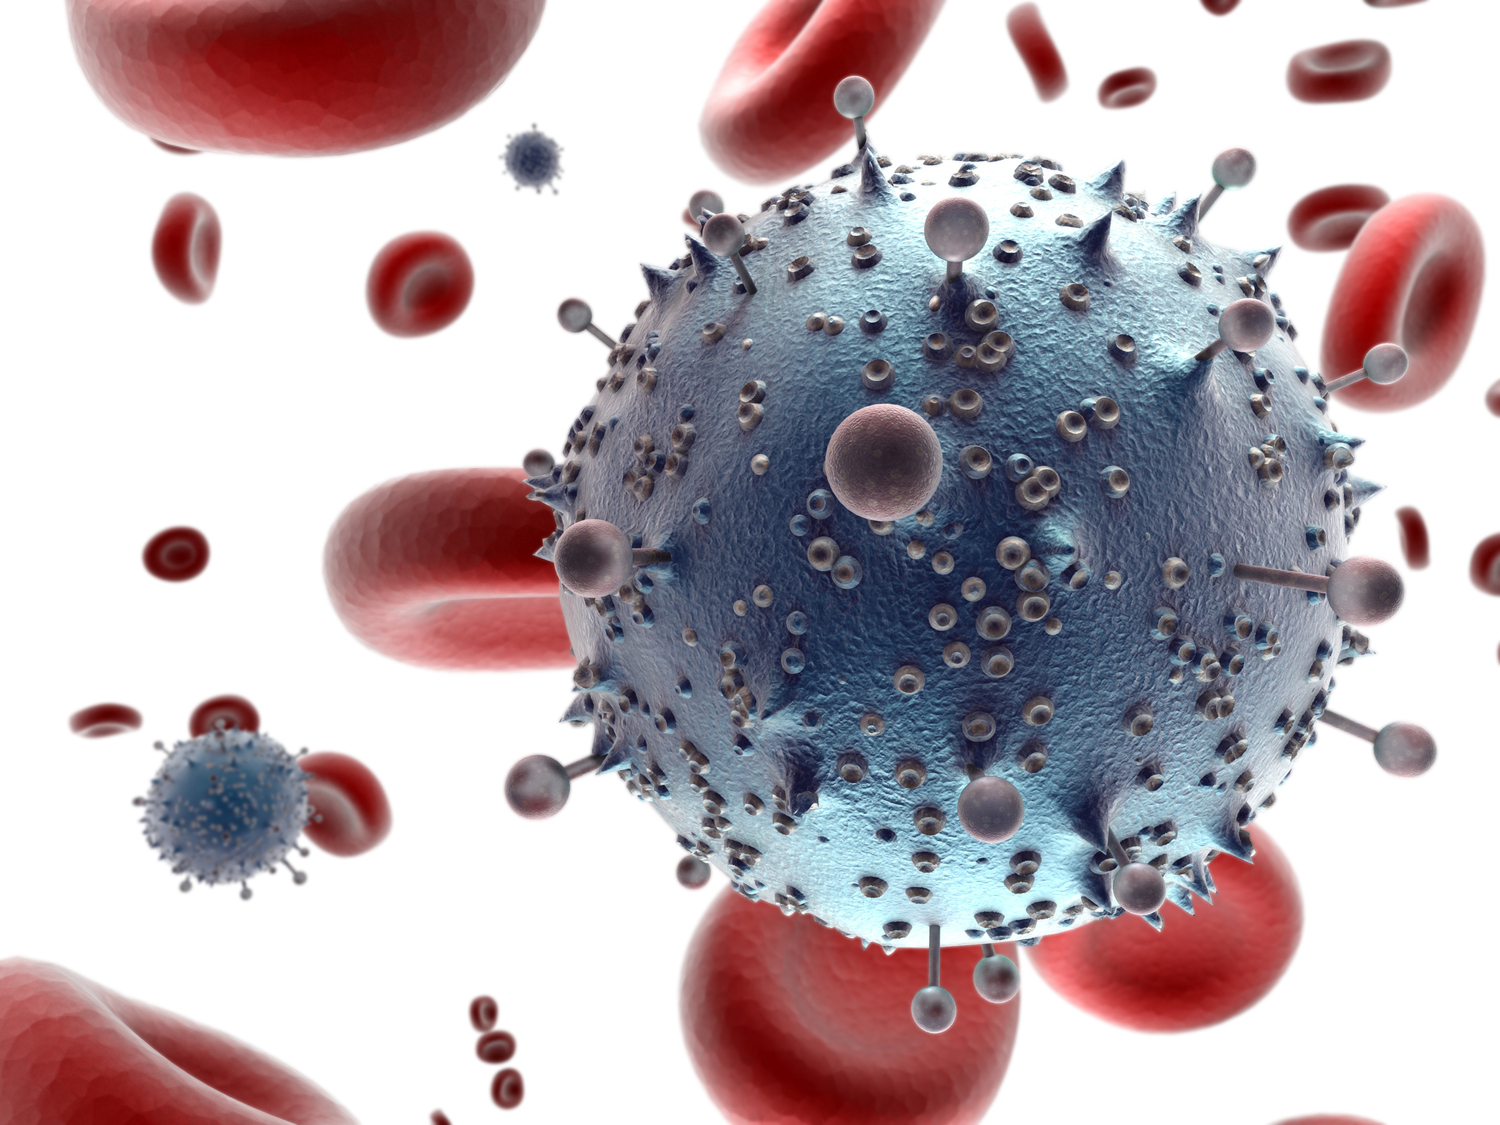 Virus cells in blood